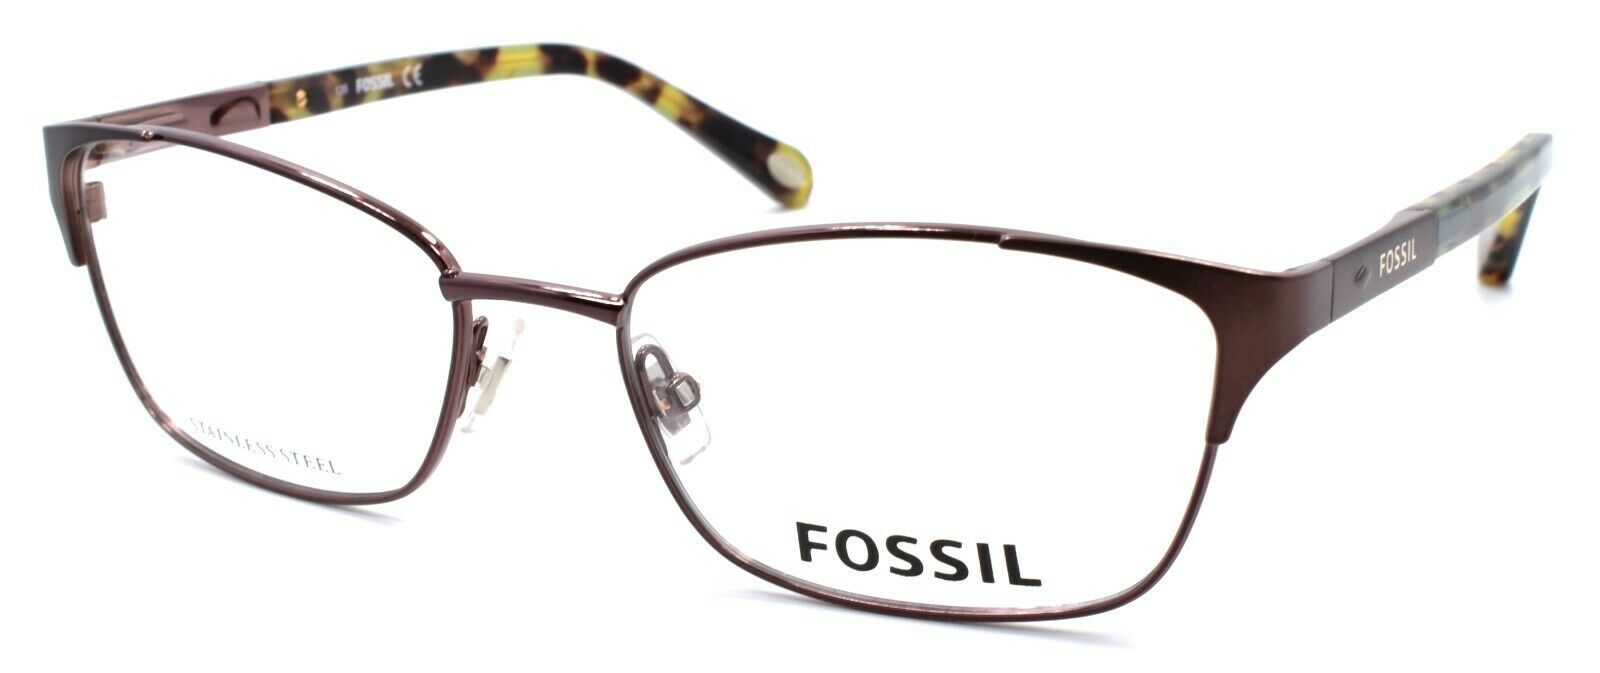 1-Fossil FOS 6048 0TY6 Women's Eyeglasses Frames 52-17-135 Brown-716737698440-IKSpecs